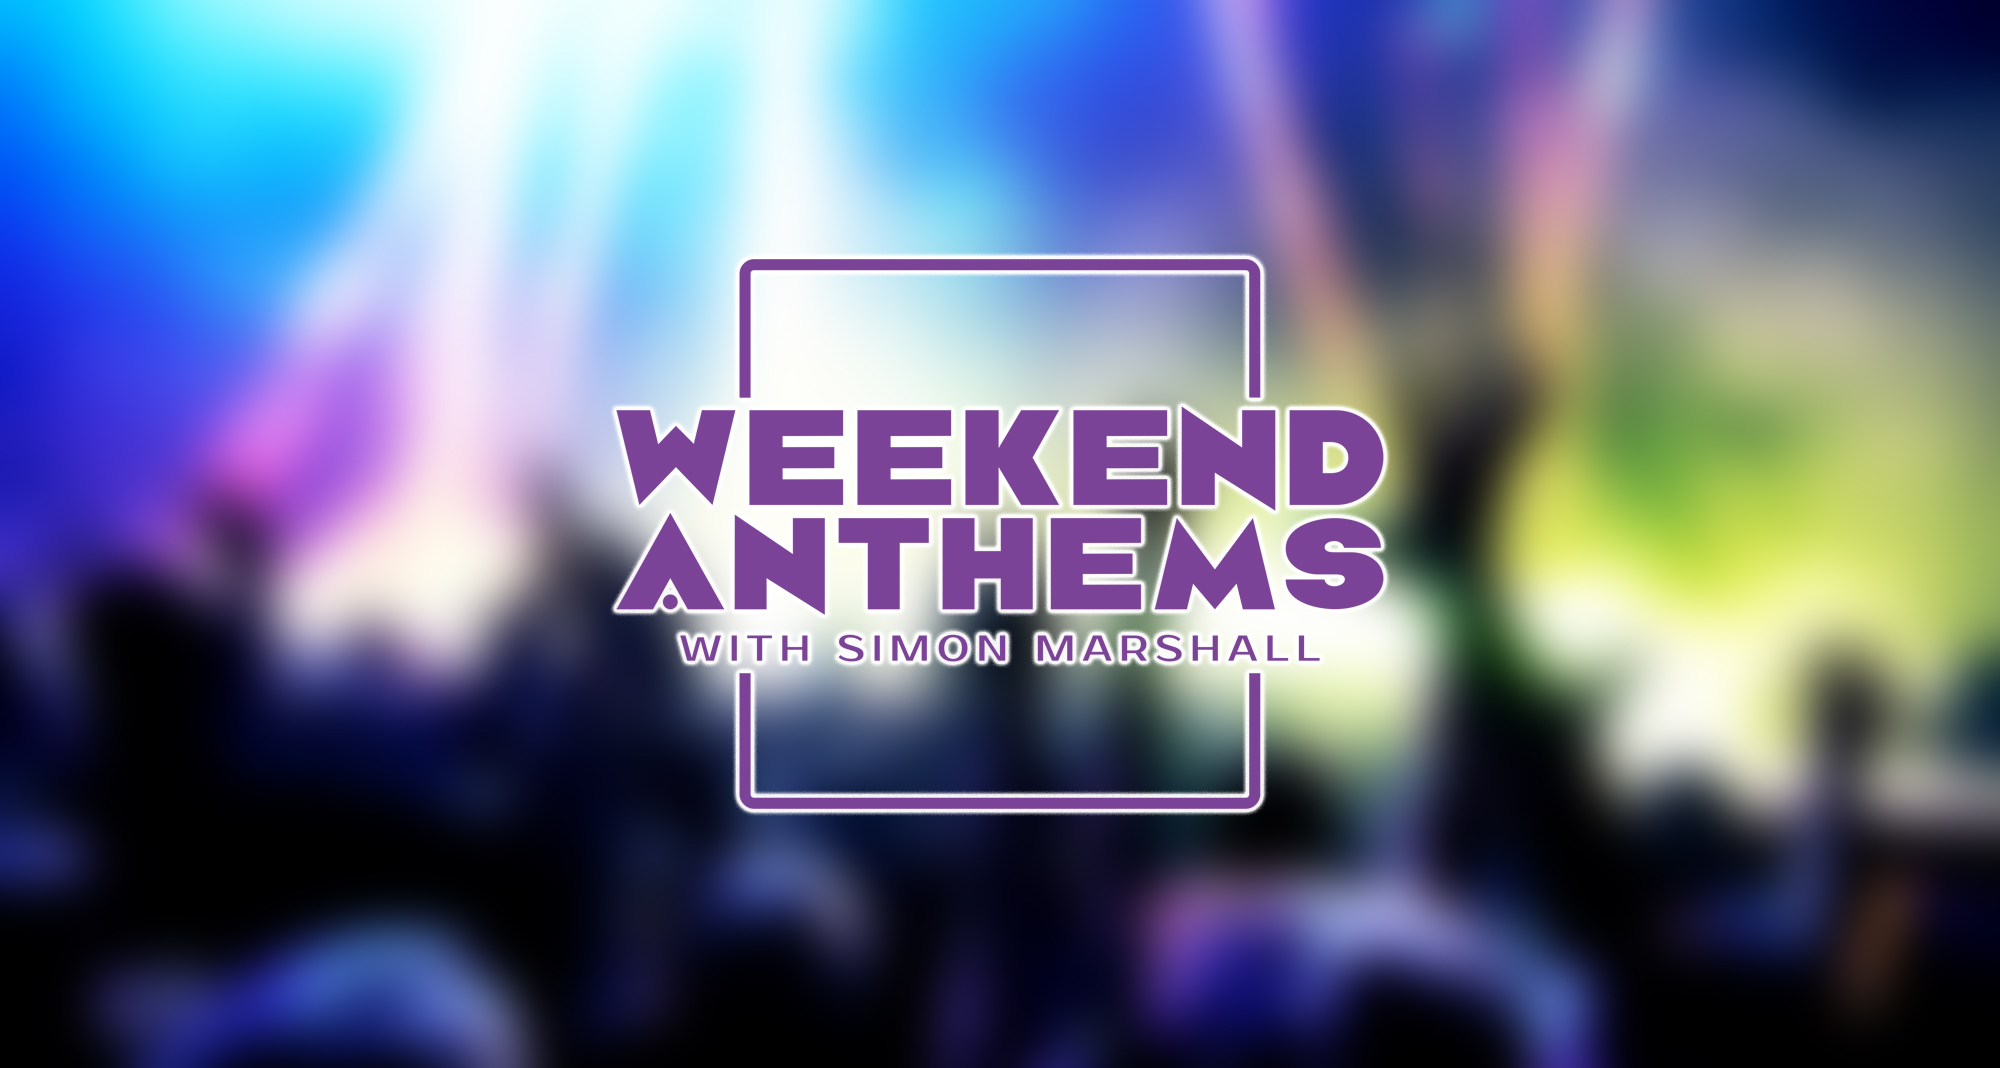 Simon Marshall’s Weekend Anthems